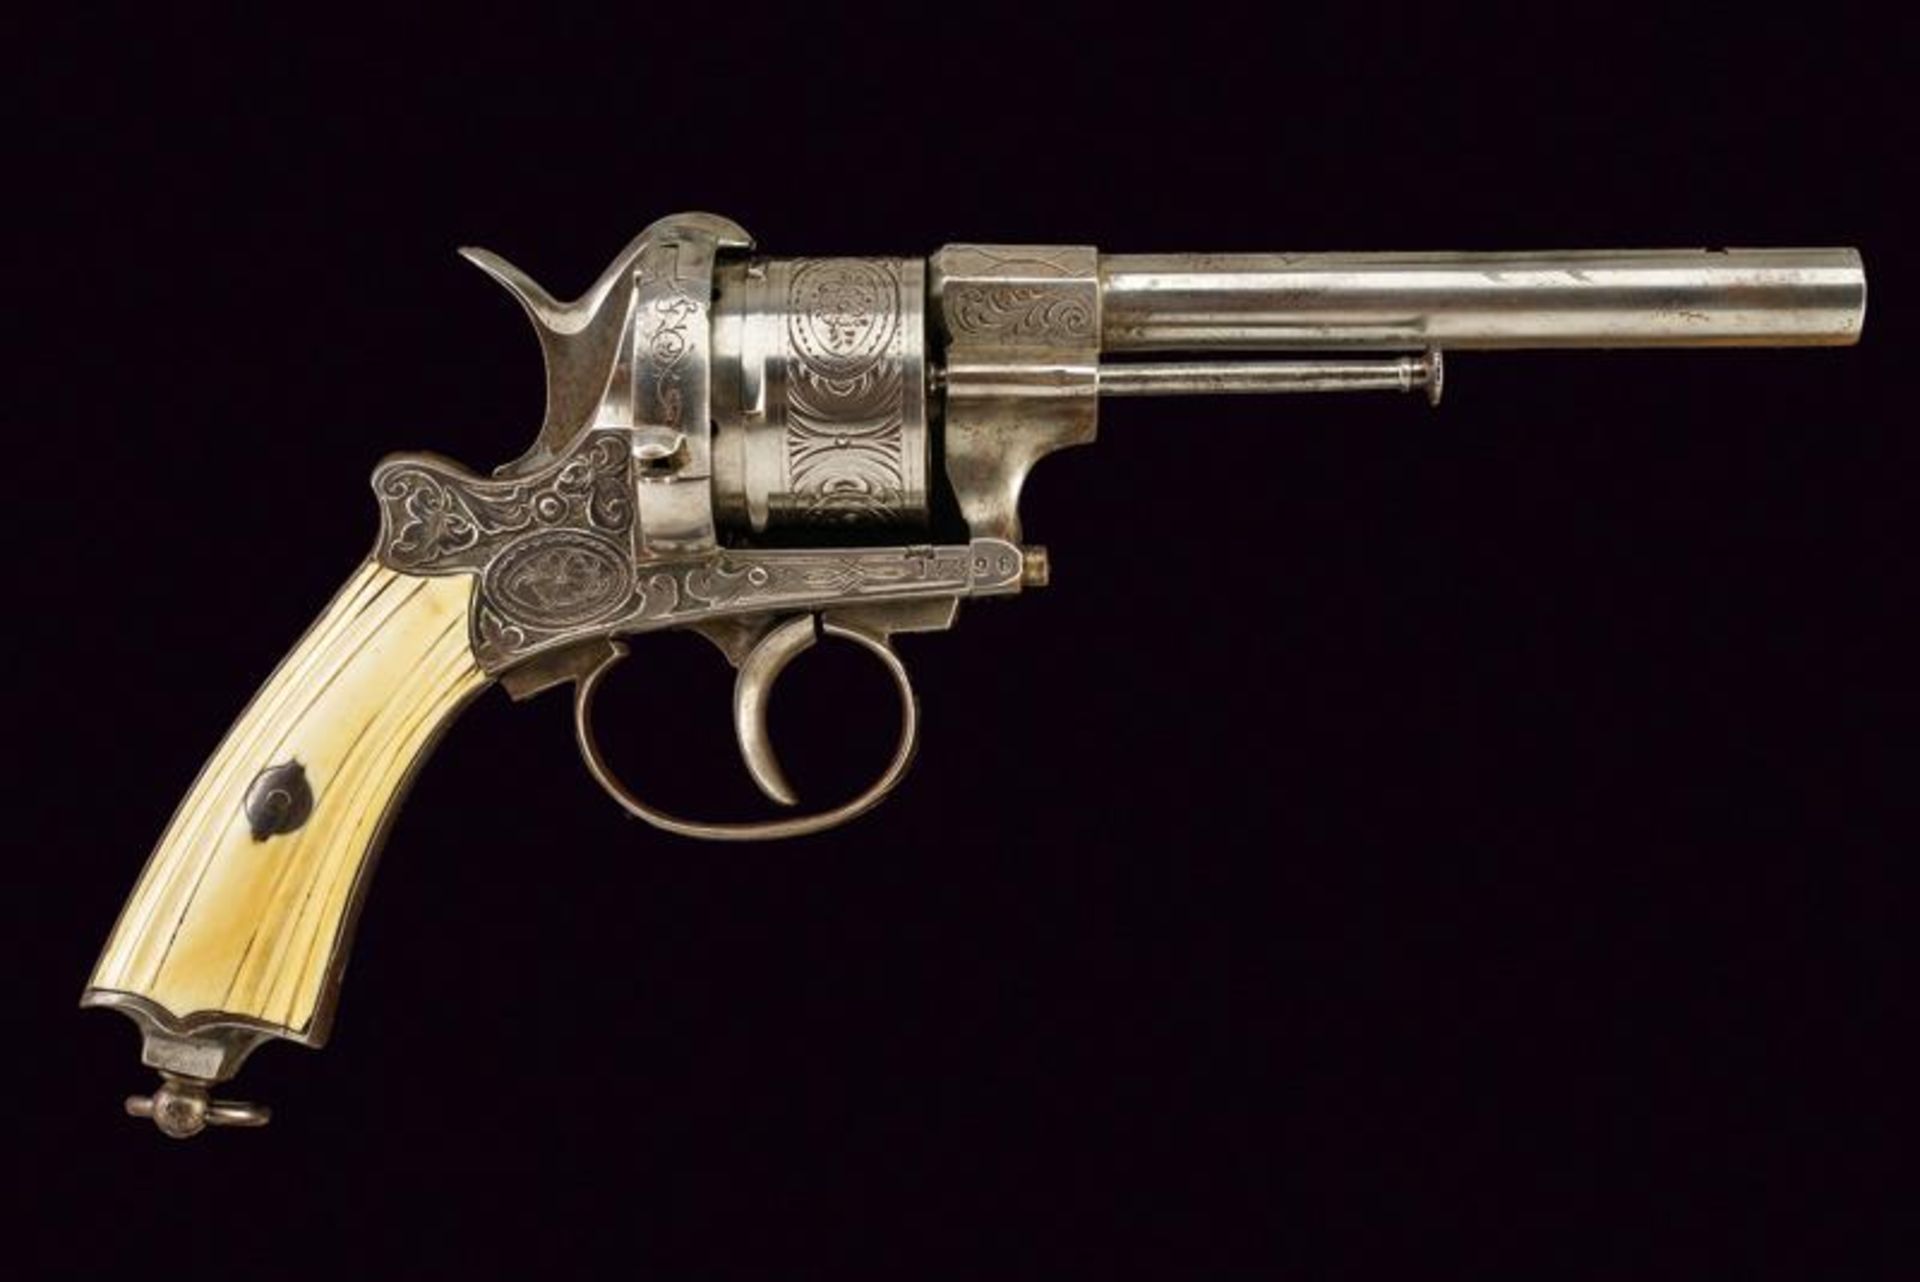 An engraved pinfire revolver